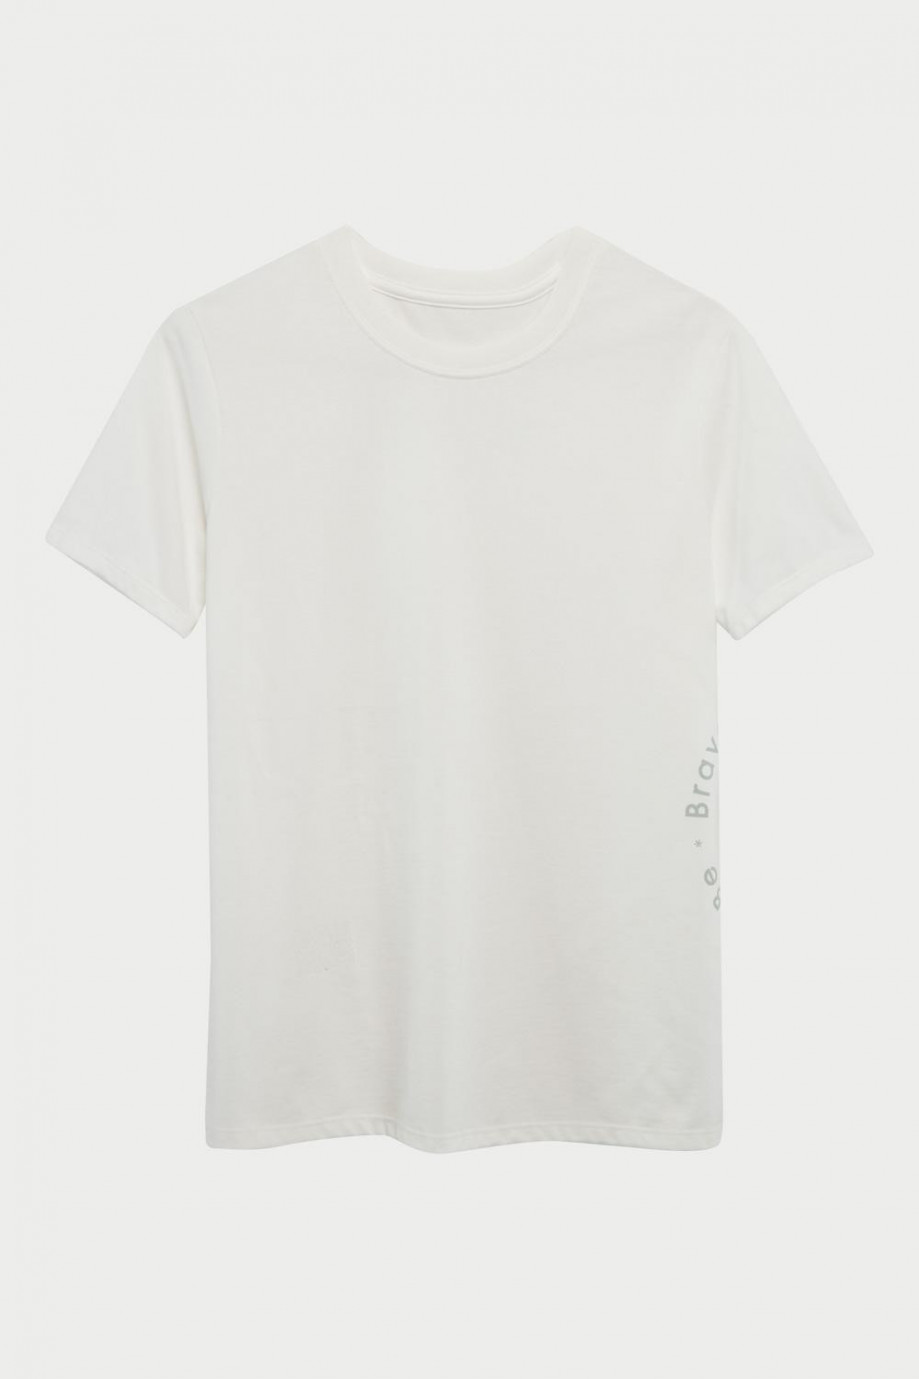 Camiseta crema claro manga corta con estampado en frente